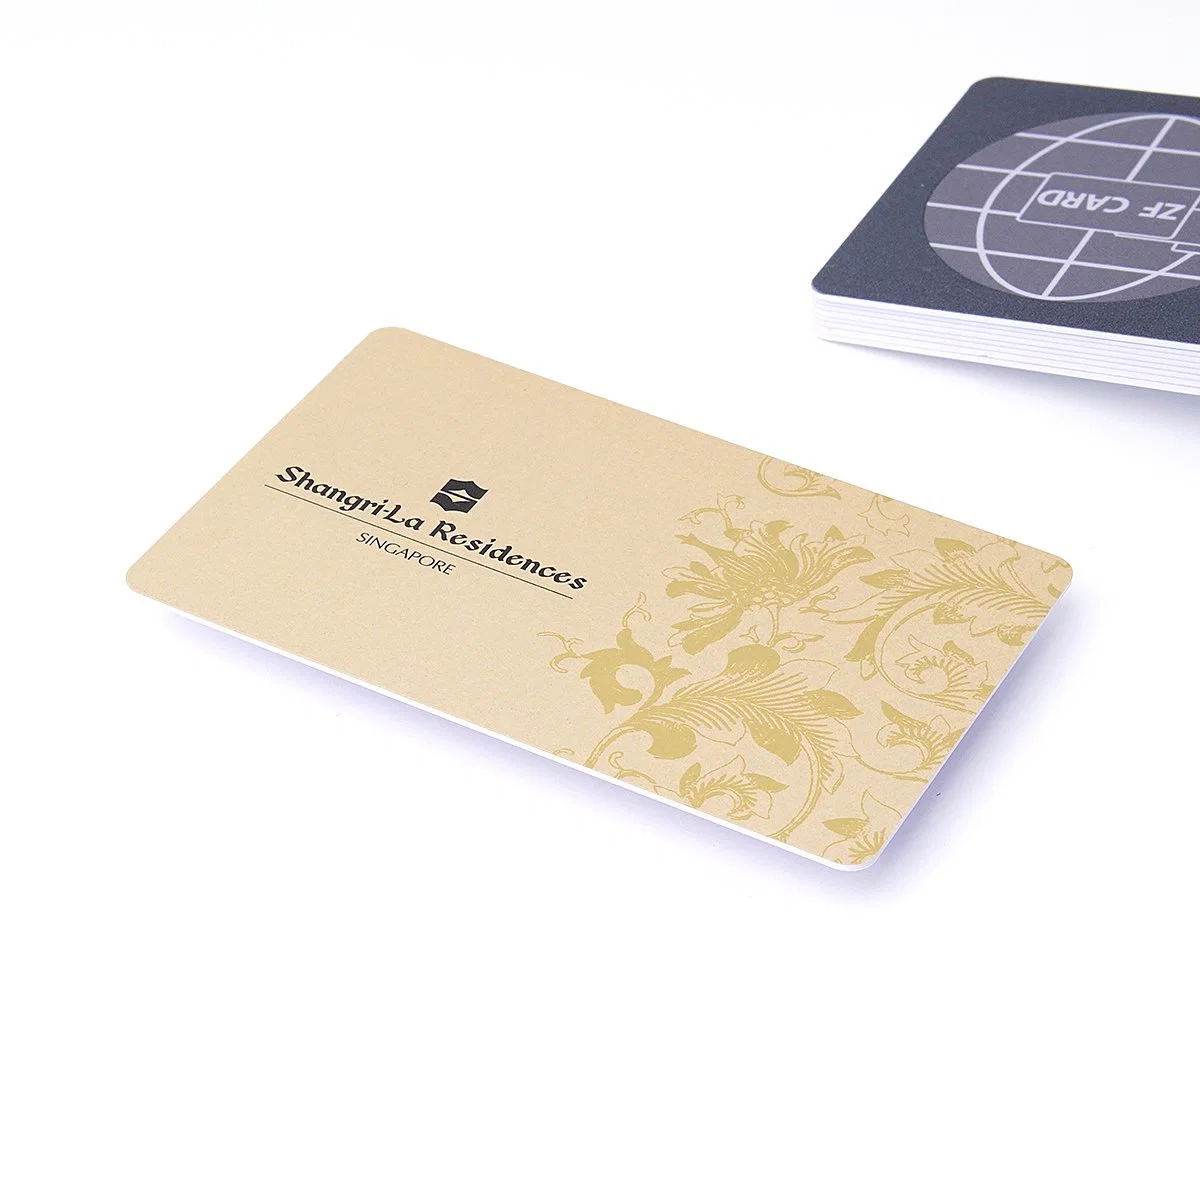 Ti2048 ISO 15693 PVC Card Printing Key